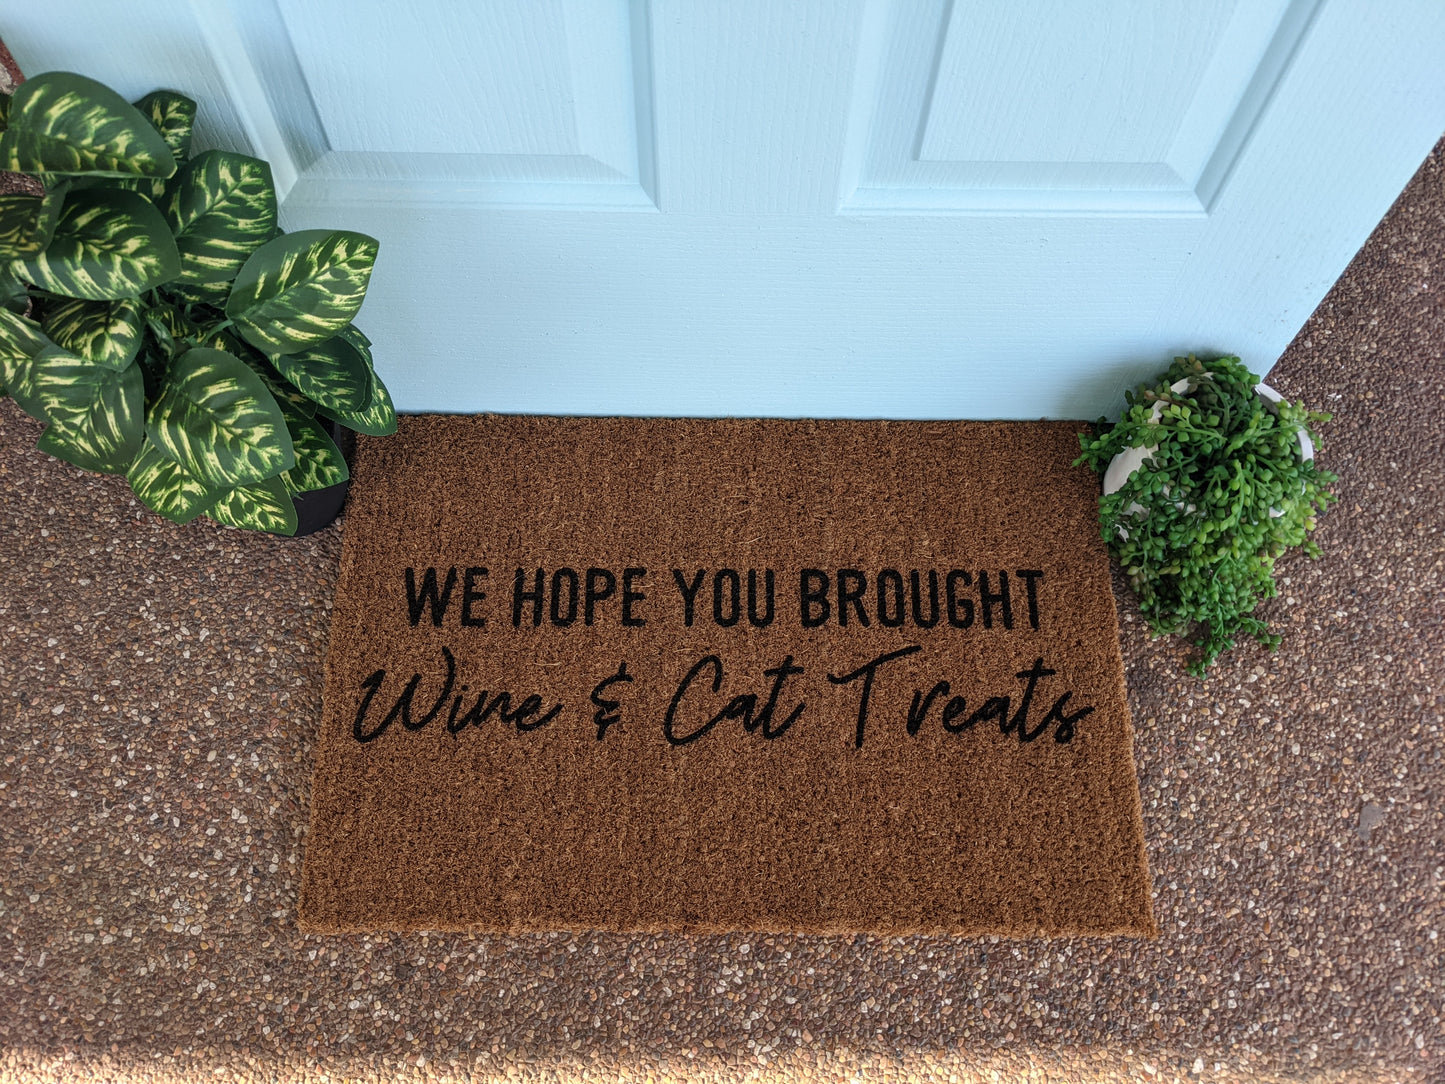 We hope you brought Wine and Cat Treats - Personalised Doormat Australia